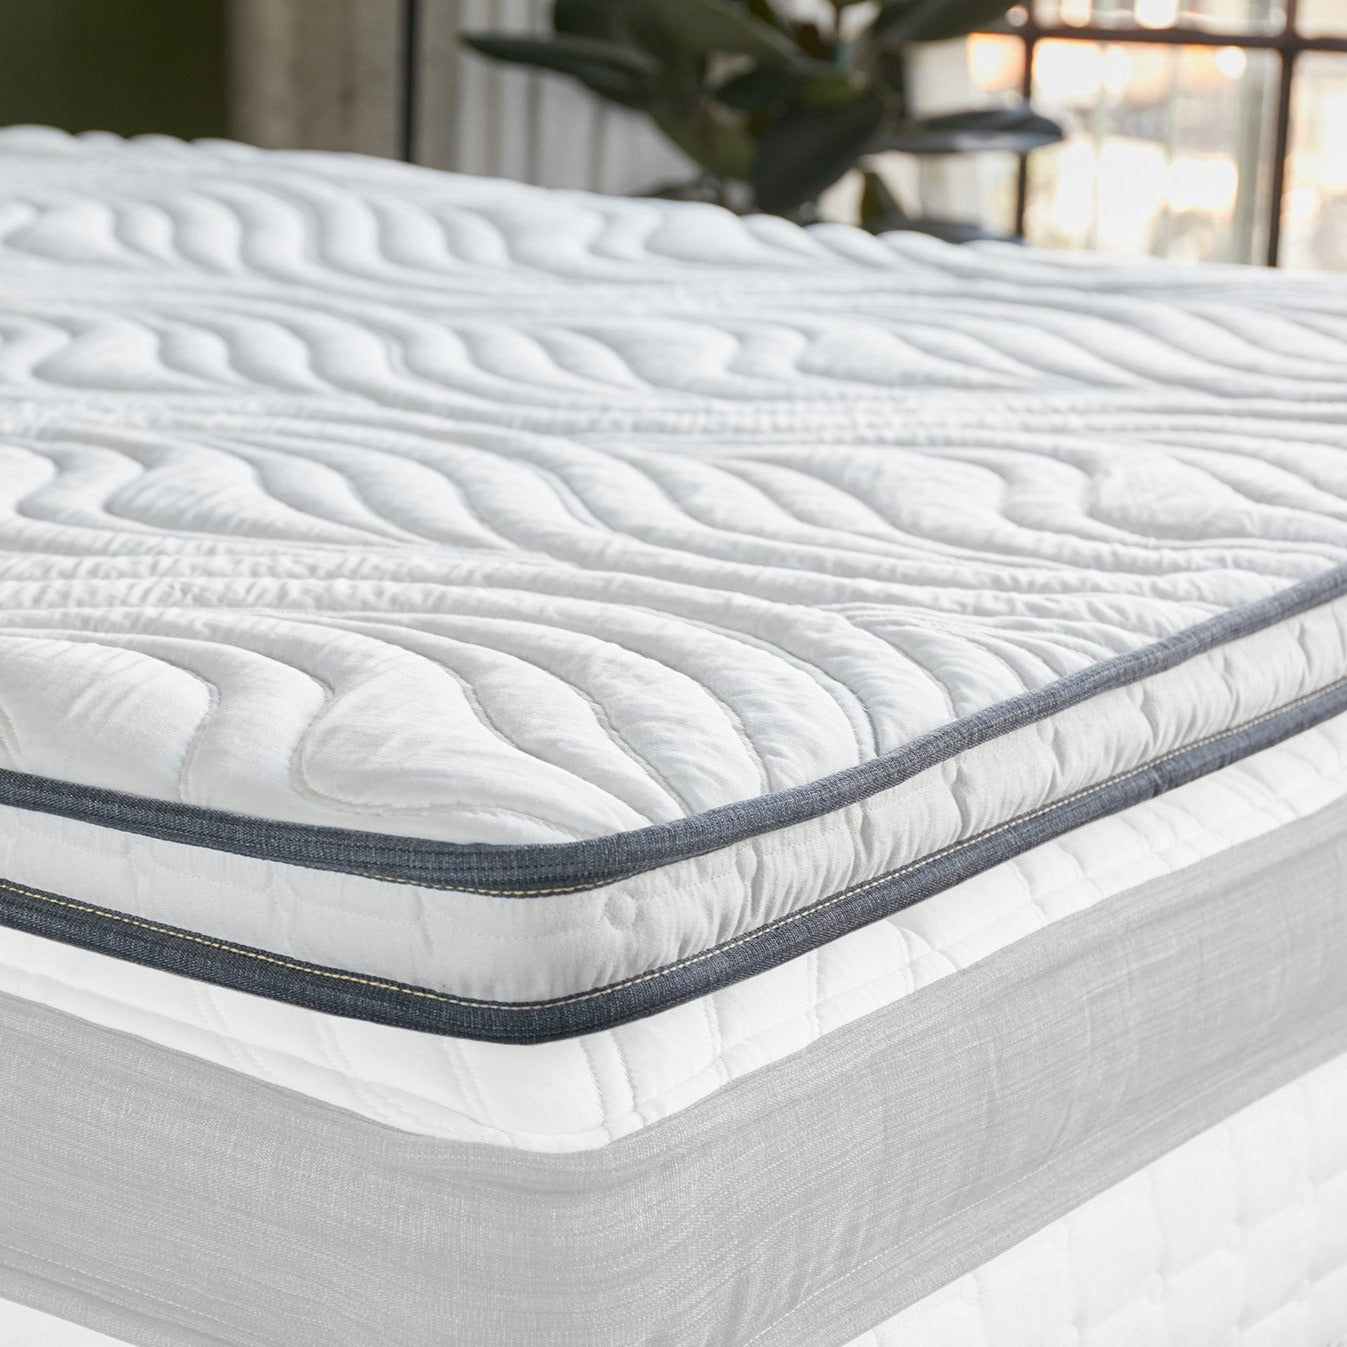 memory foam mattress topper safe for baby